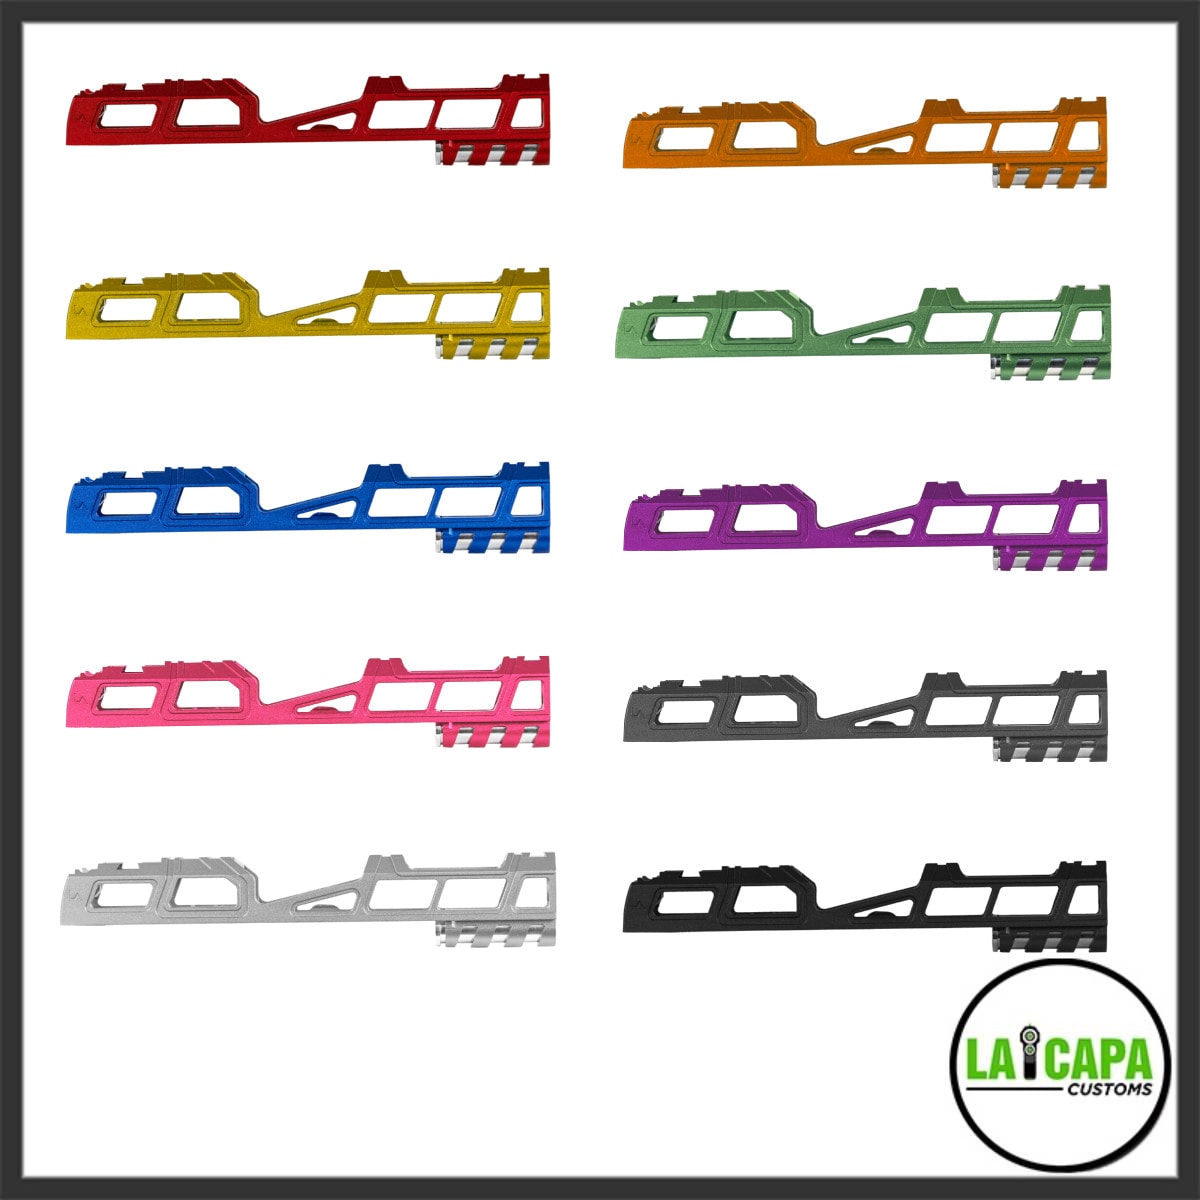 LA Capa Customs 5.1 “Hyper” Aluminum Slide - Pink